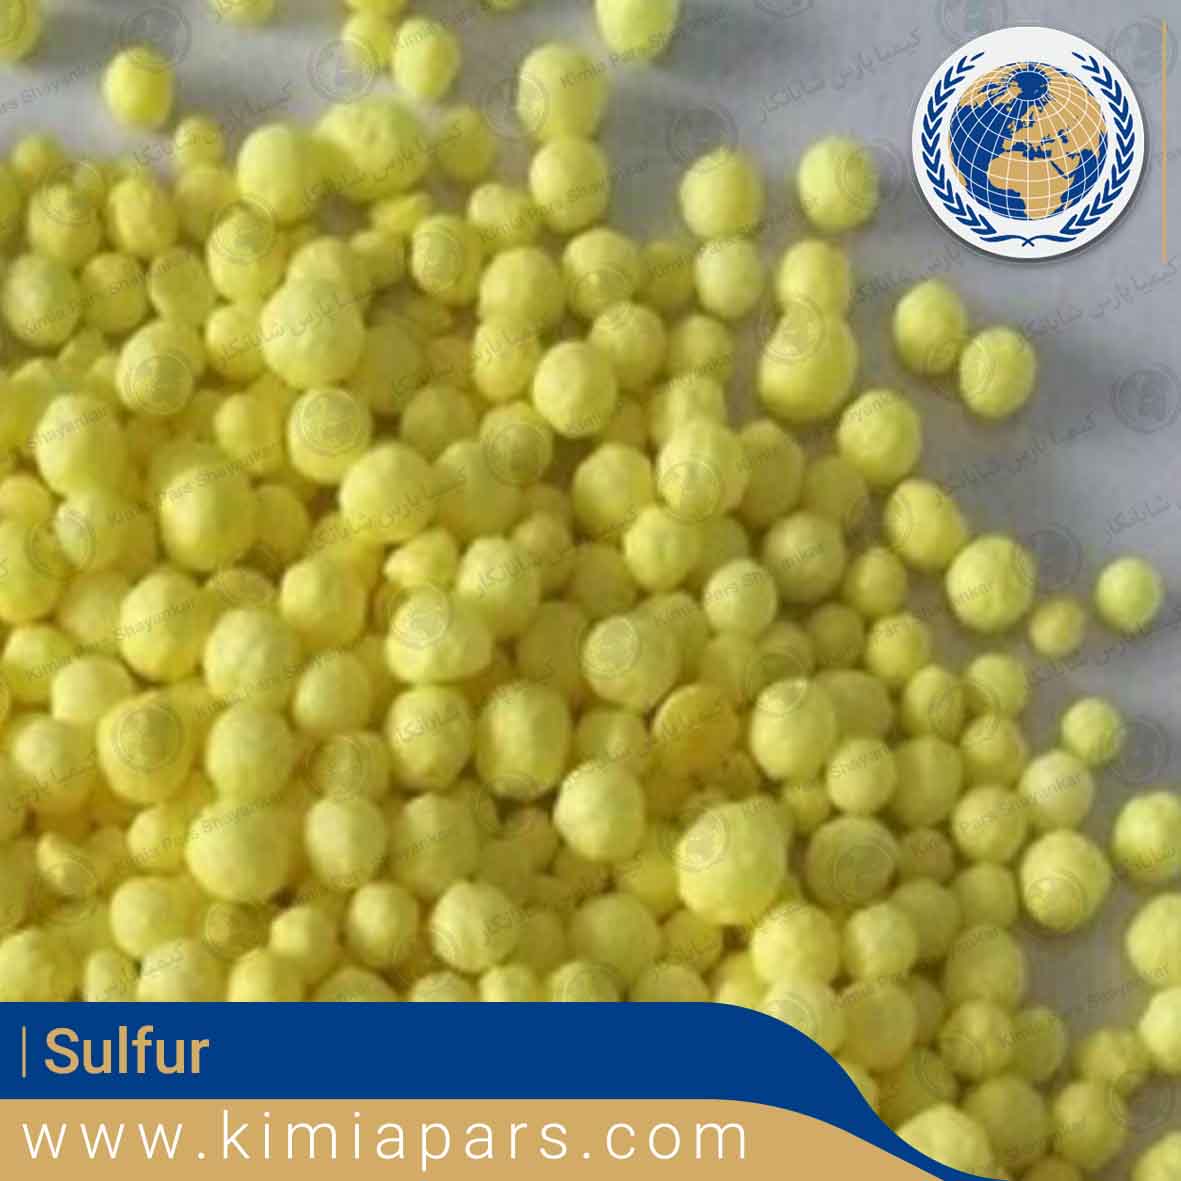 sulfur fertilizer